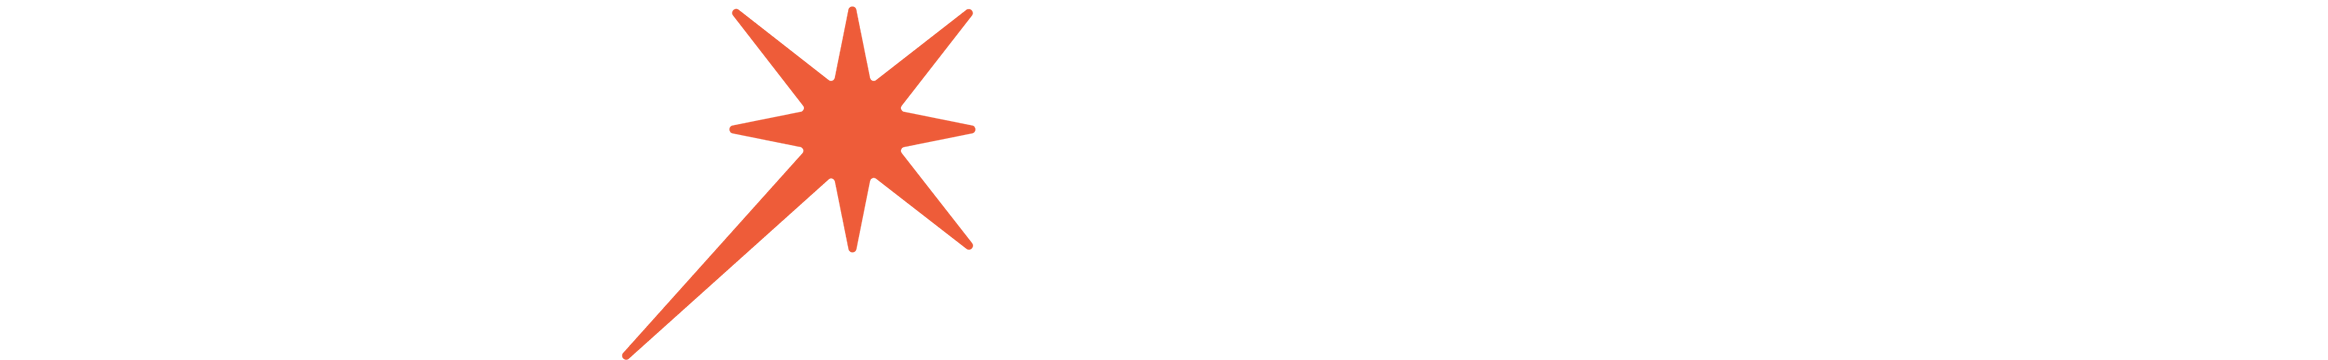 Vibe Science Logo White